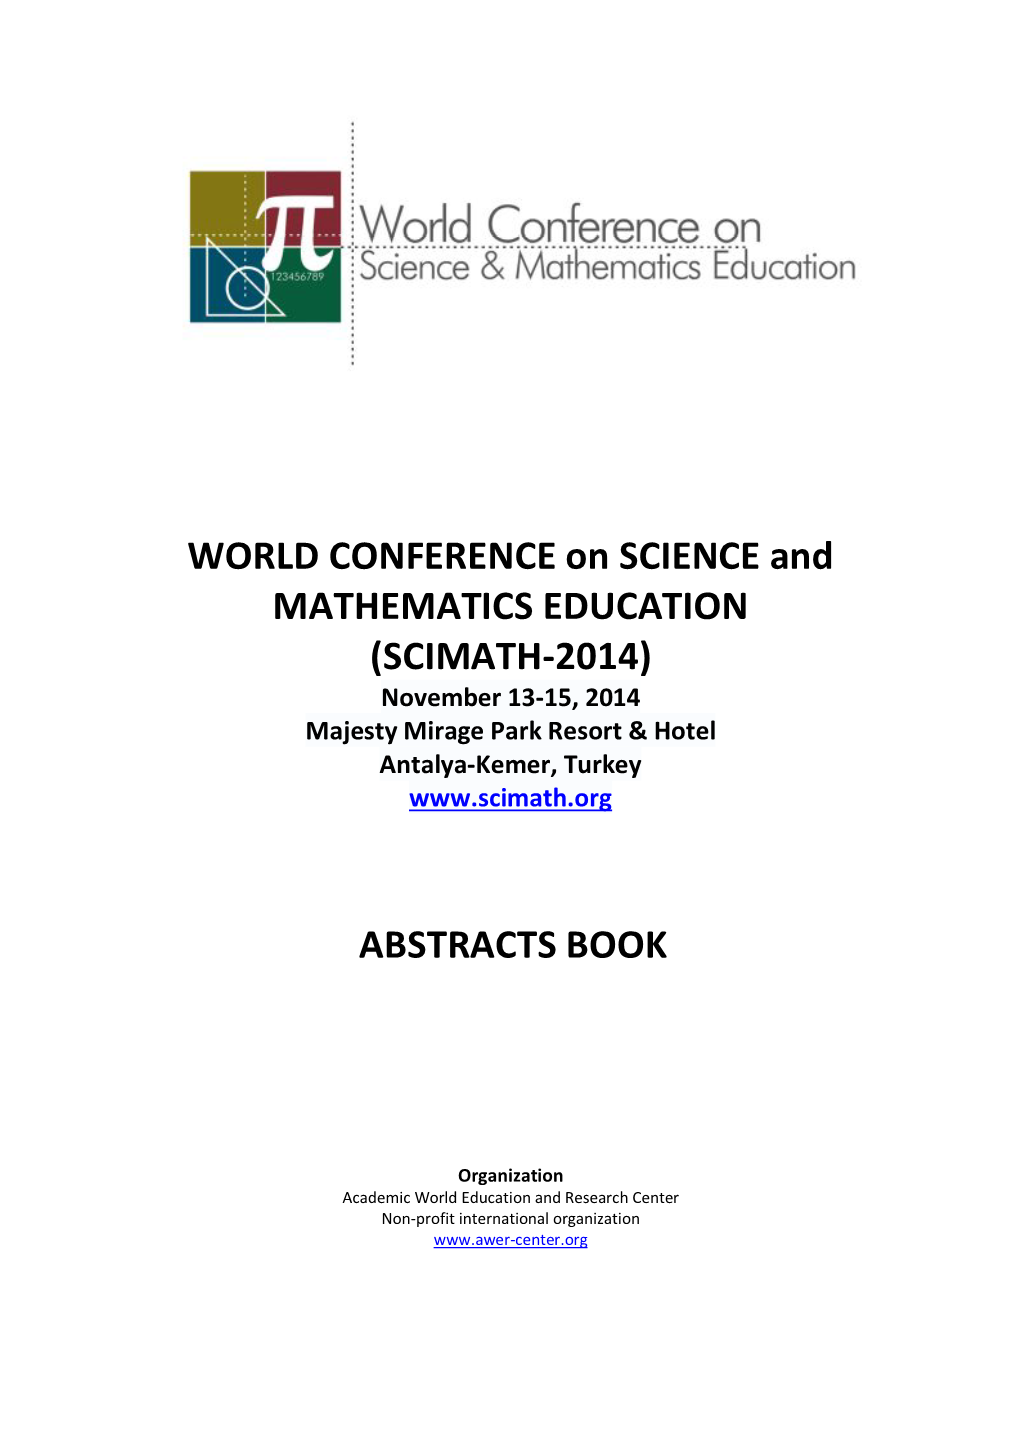 WORLD CONFERENCE on SCIENCE and MATHEMATICS EDUCATION (SCIMATH-2014) November 13-15, 2014 Majesty Mirage Park Resort & Hotel Antalya-Kemer, Turkey